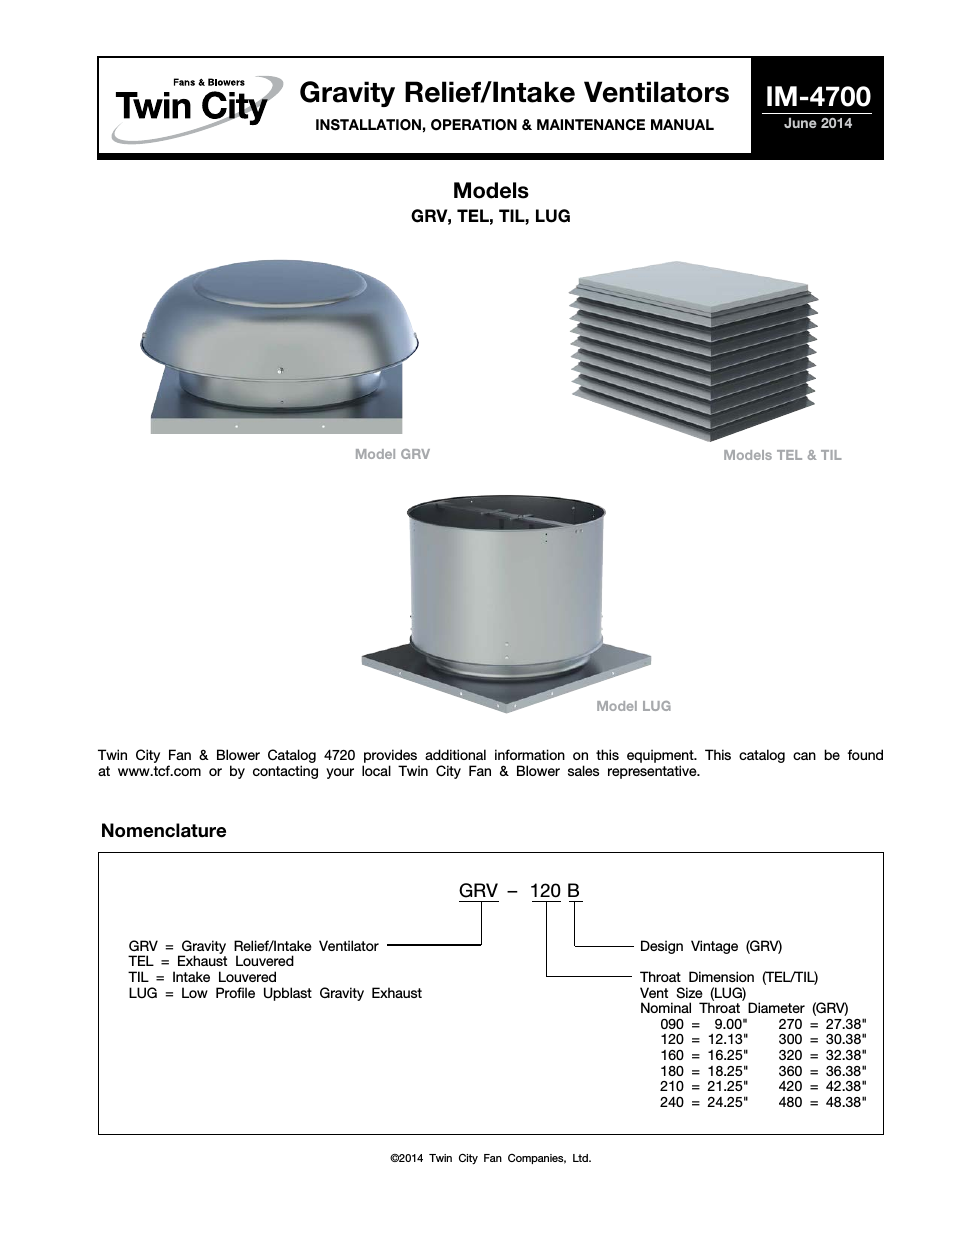 Gravity Relief / Intake Ventilators - IM-4700